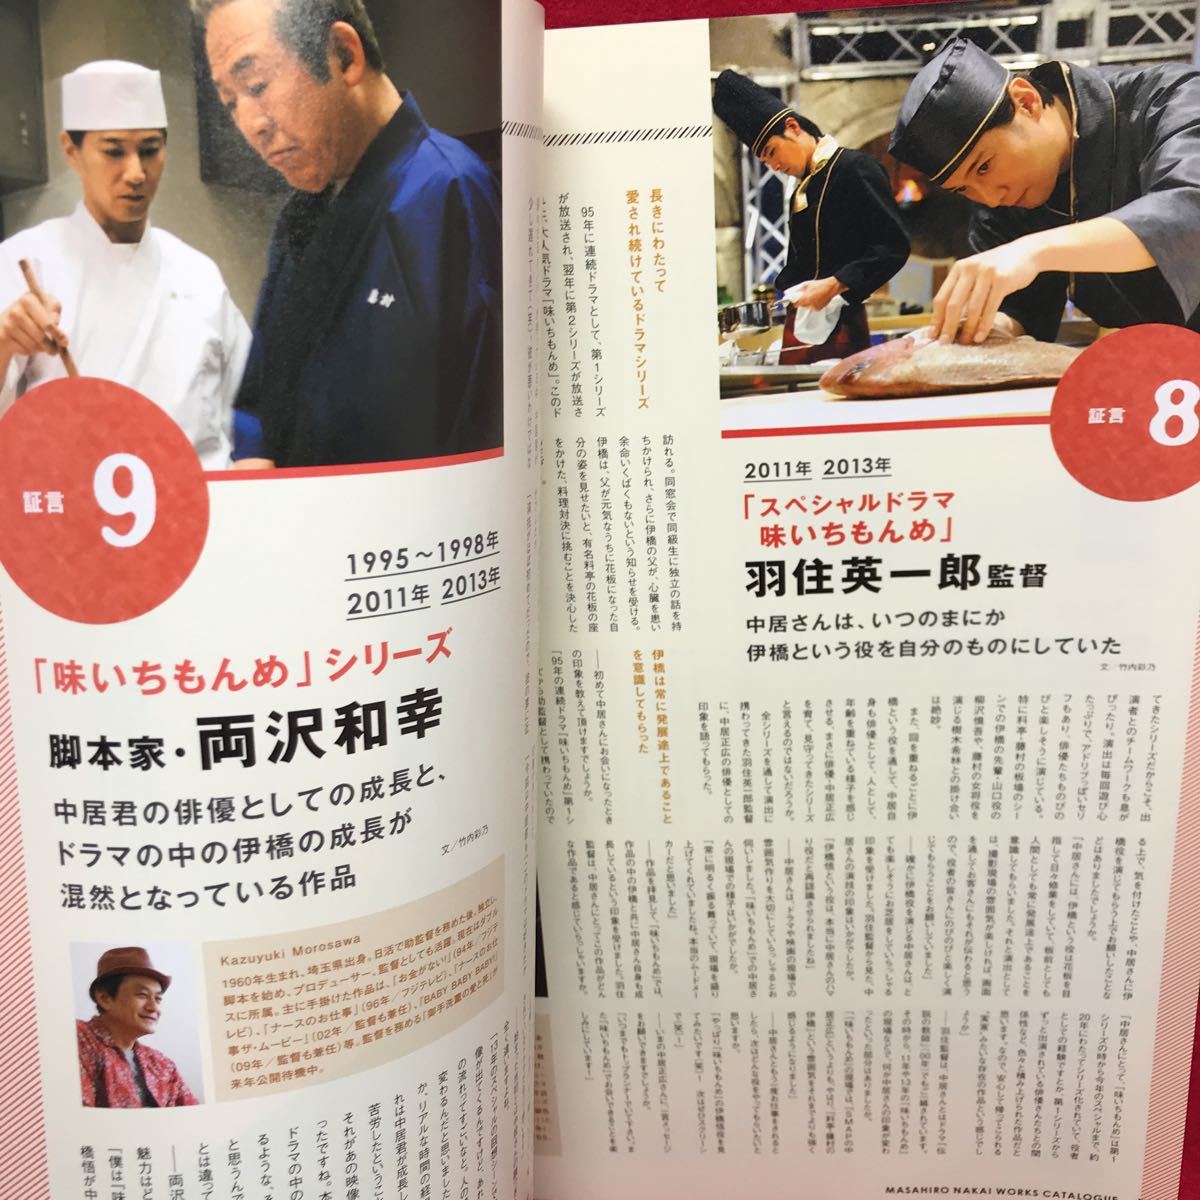 ヤフオク 日本映画magazine 13 Vol 35 中居正広 劇場